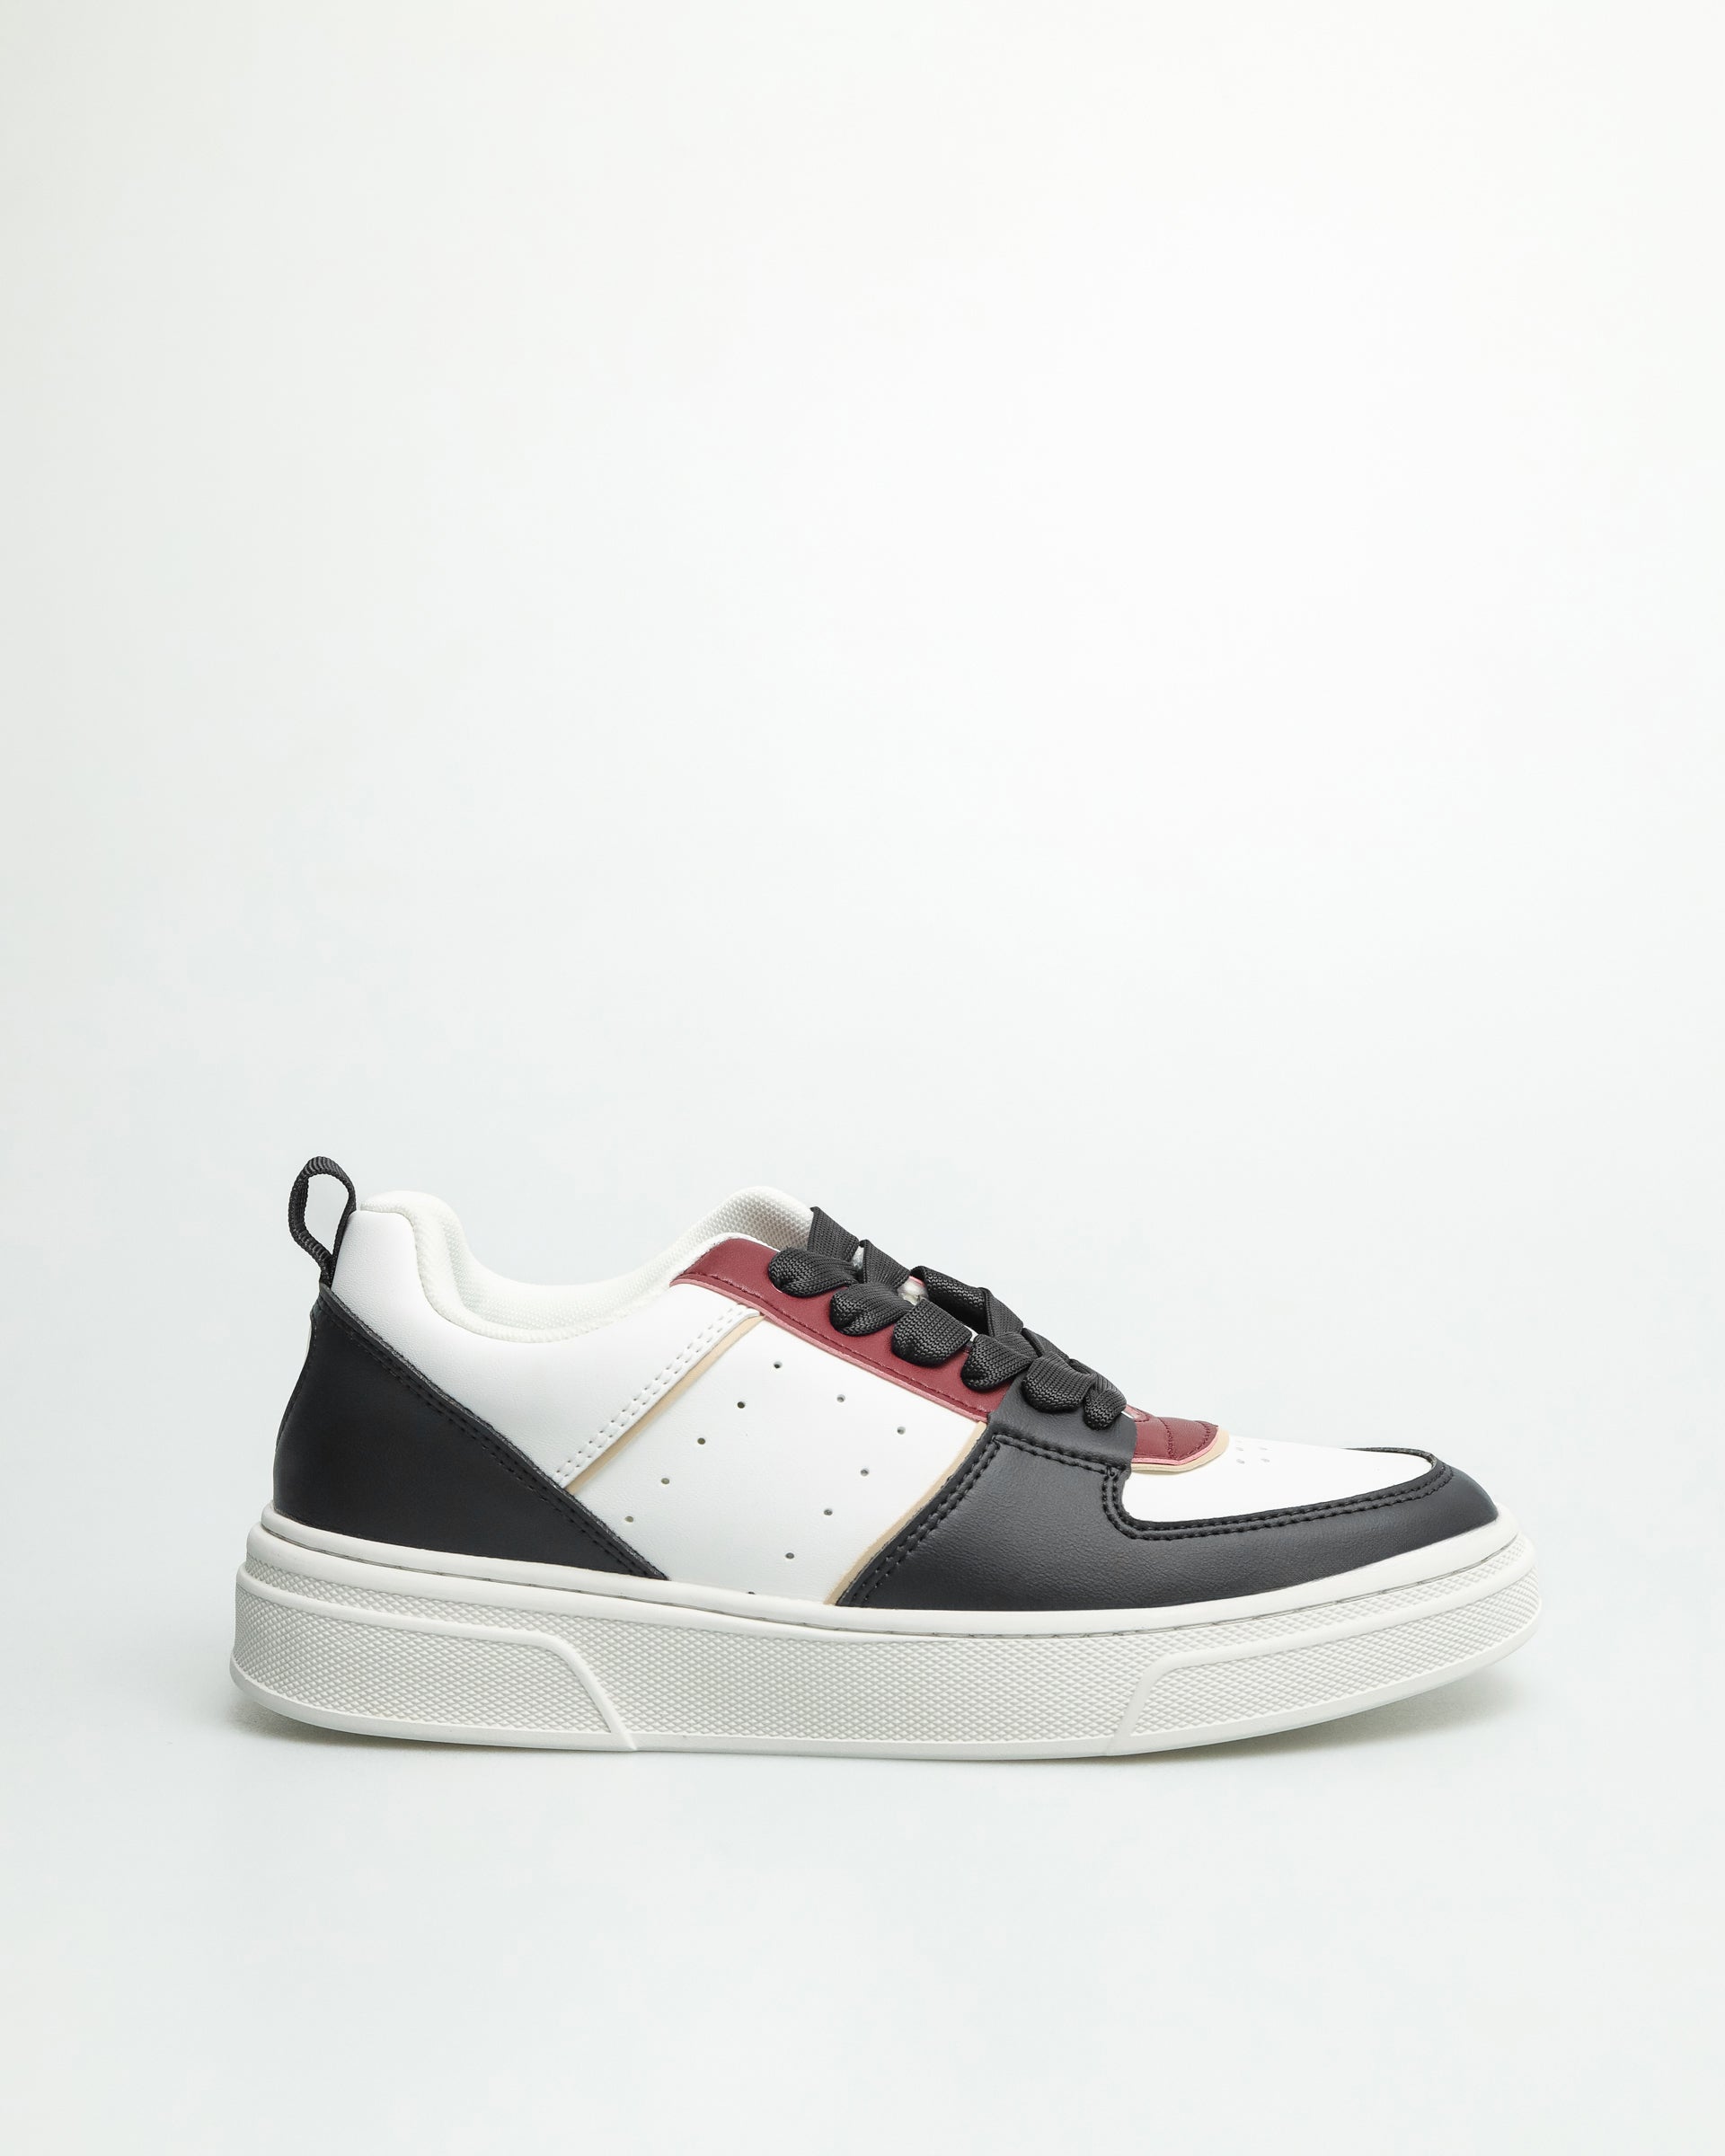 Tomaz TY017 Men's Sneakers (Black/White/Red) – TOMAZ